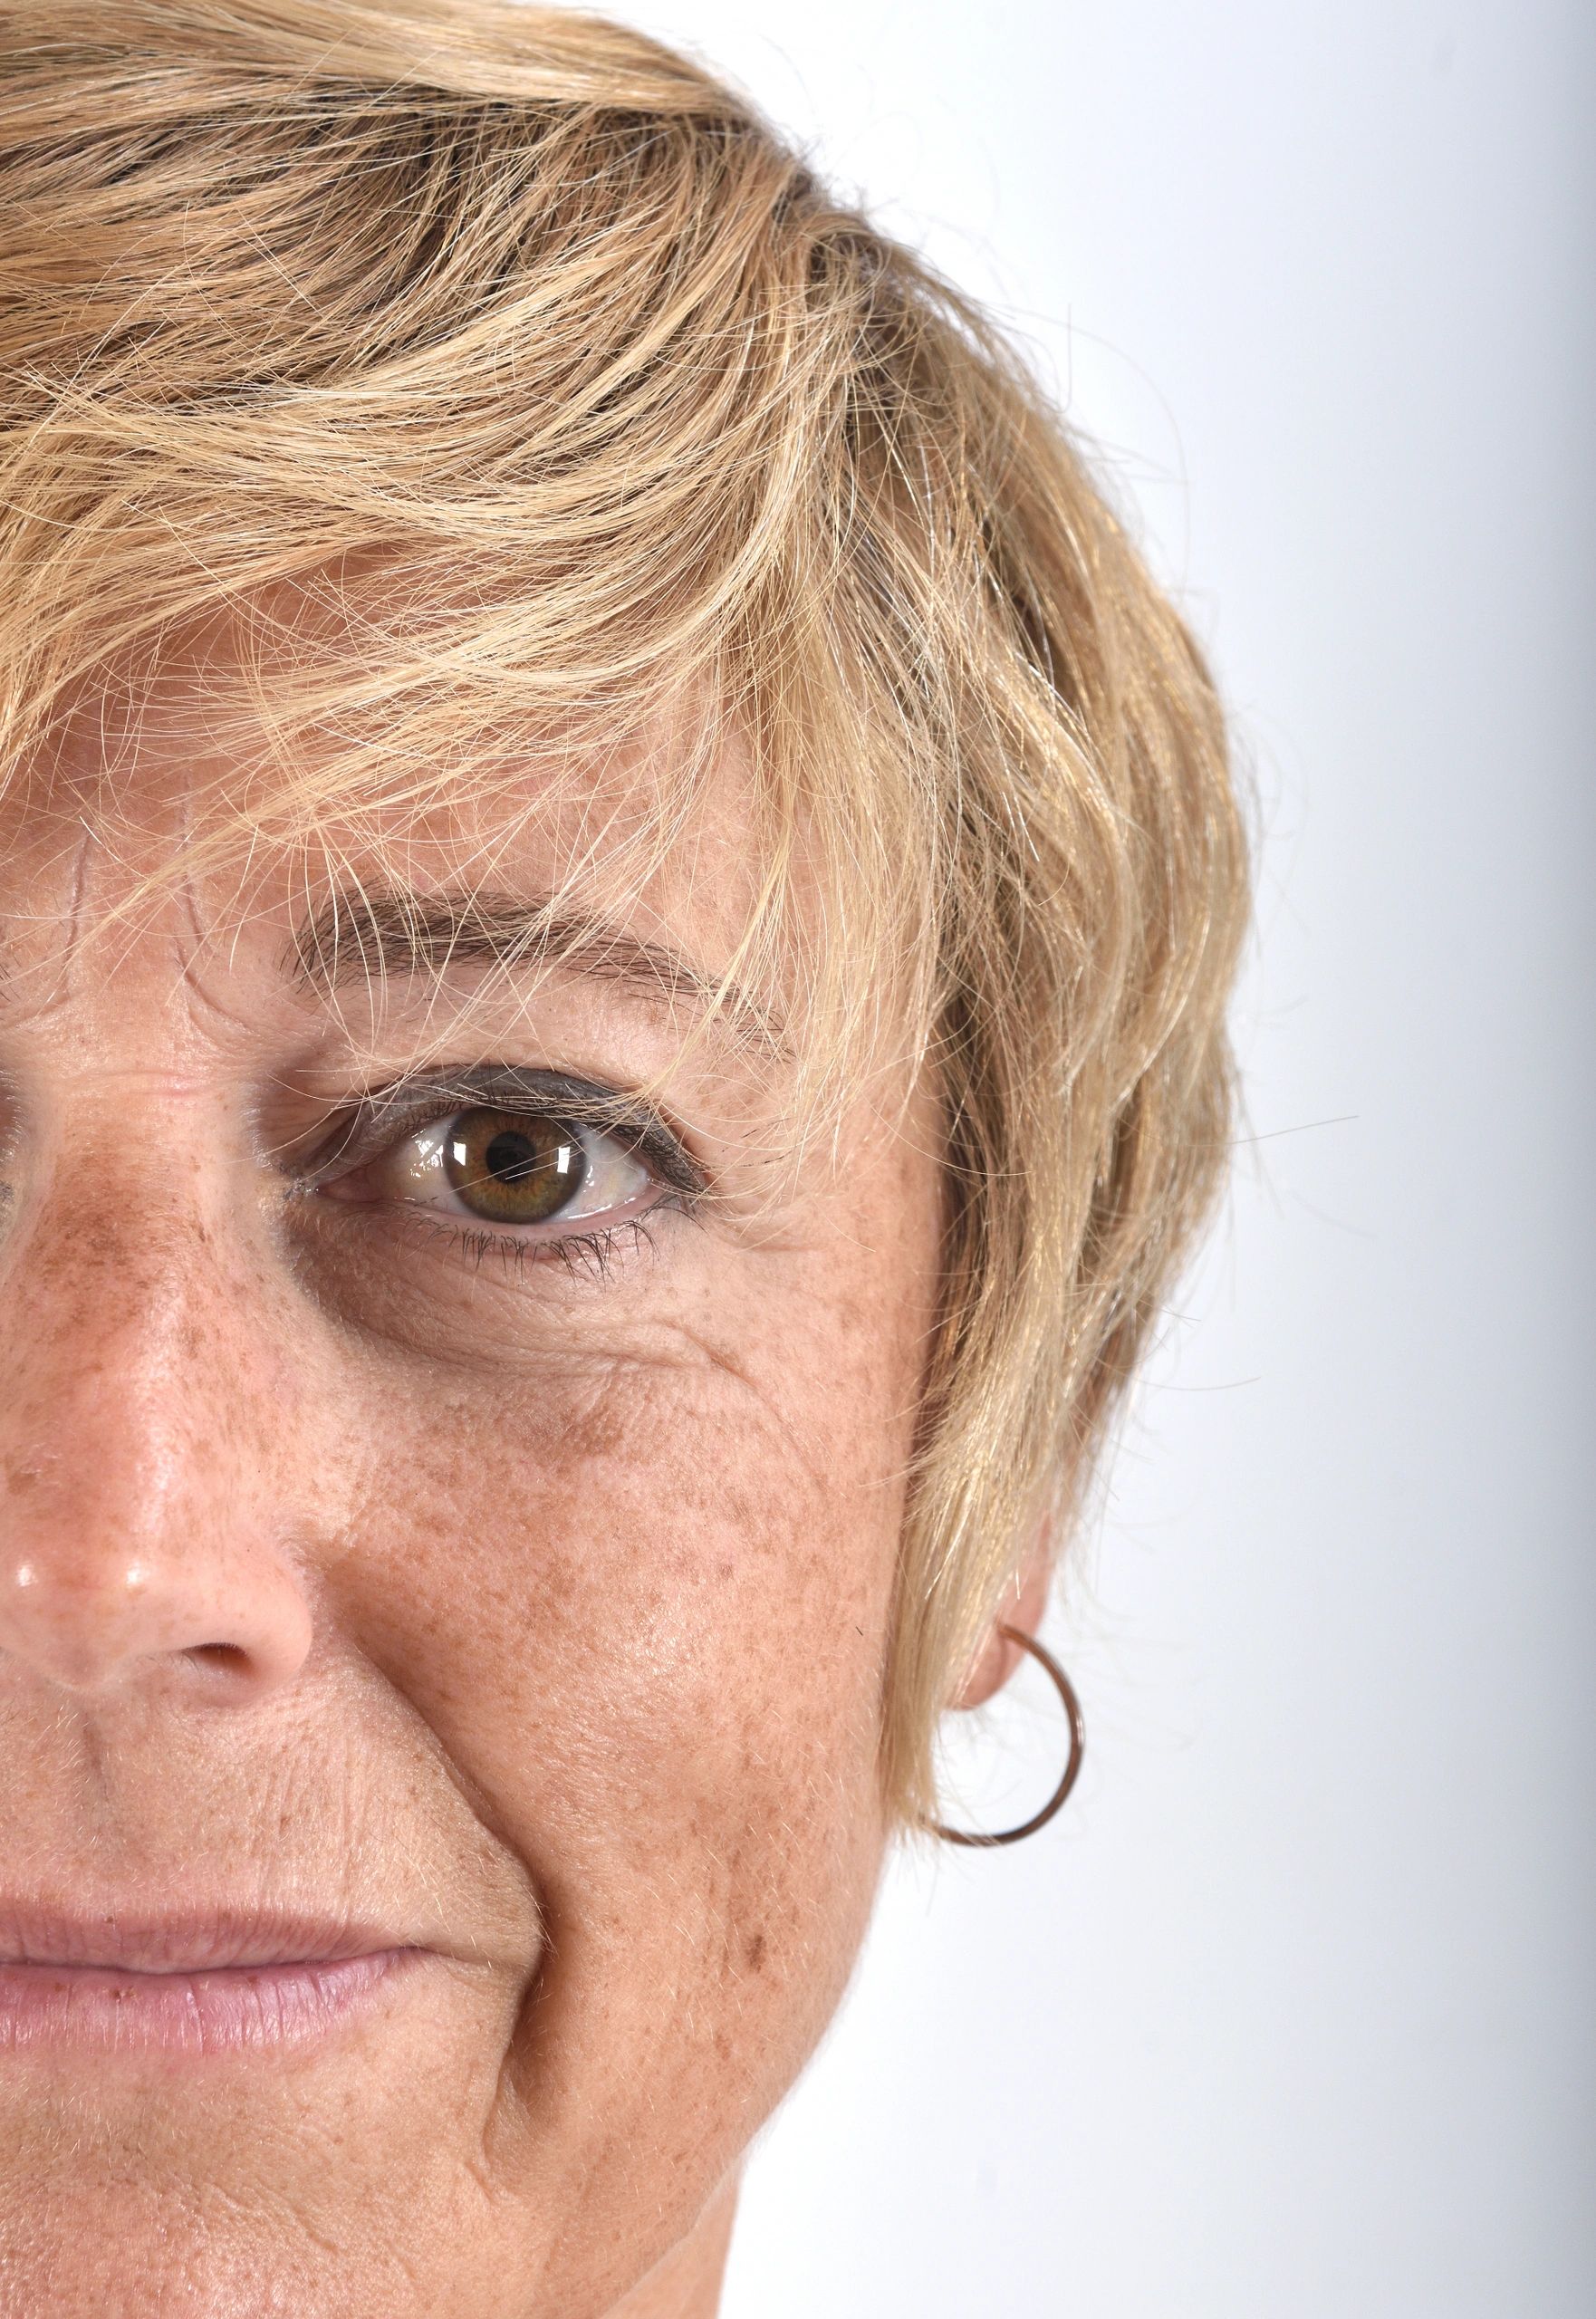 Manchas
Tratamiento para manchas
Facial
Melasma
Dra Monica Pineda